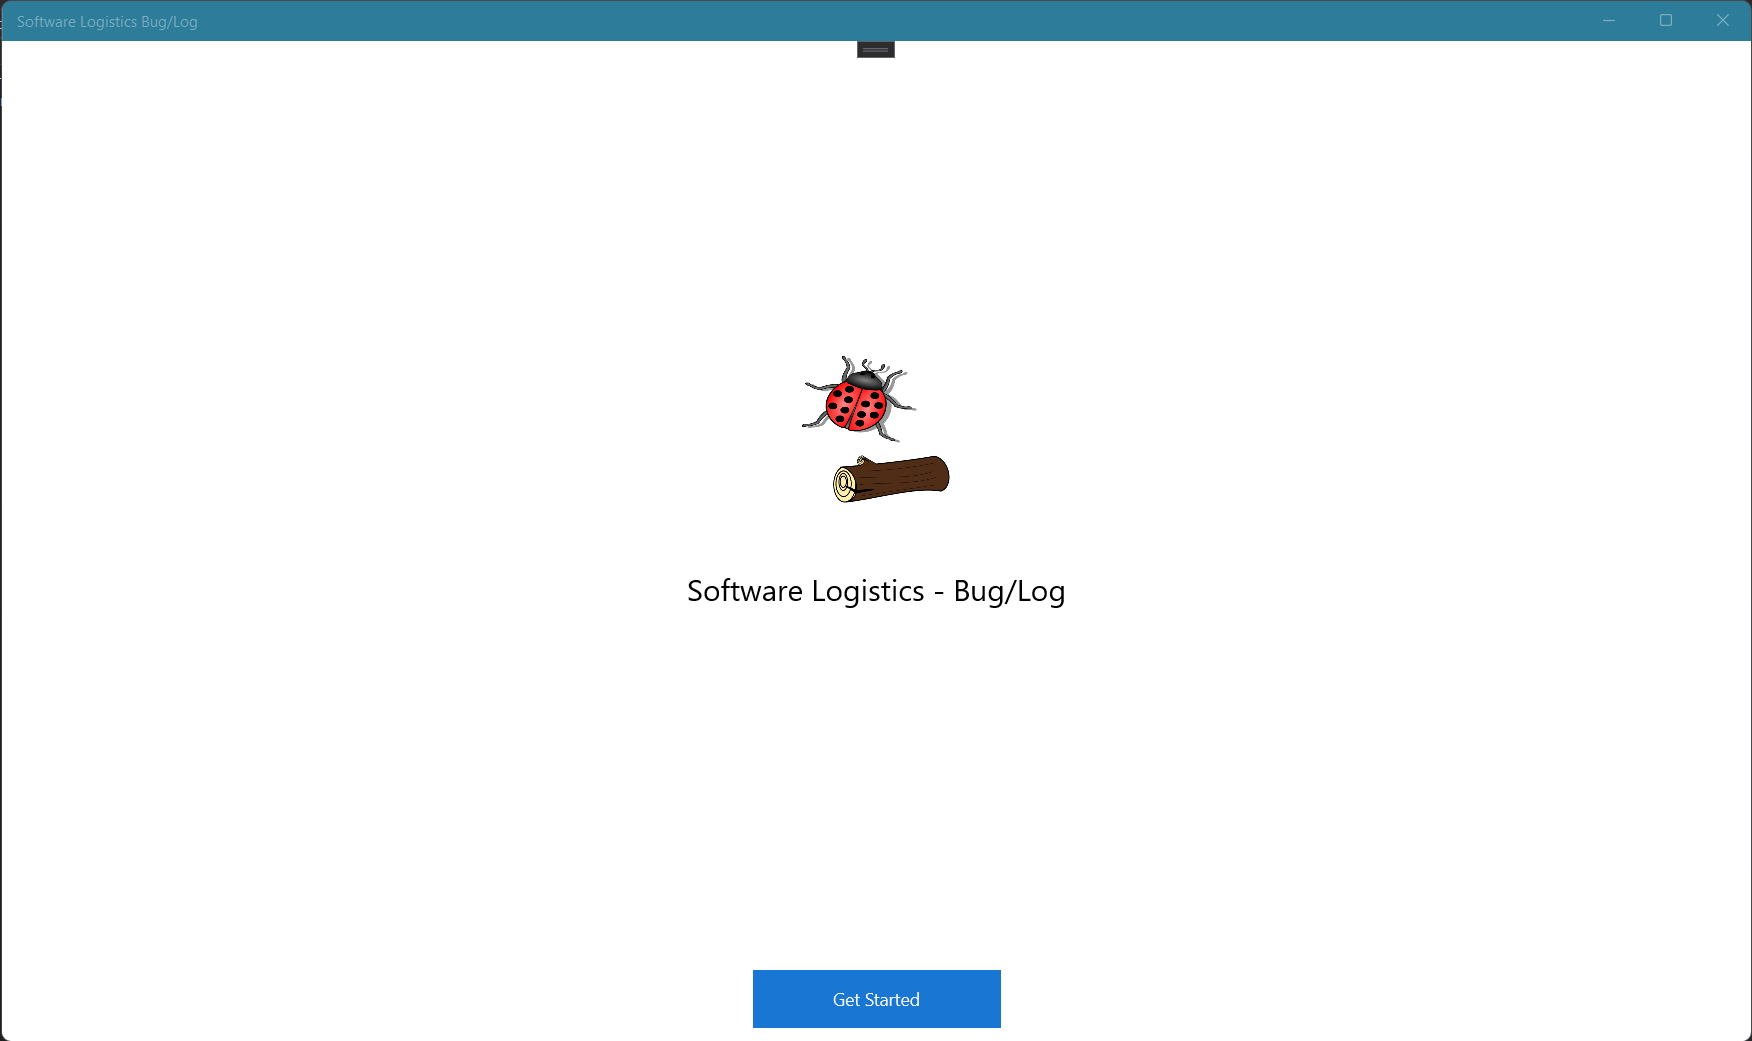 Software Logistics Bug/Log